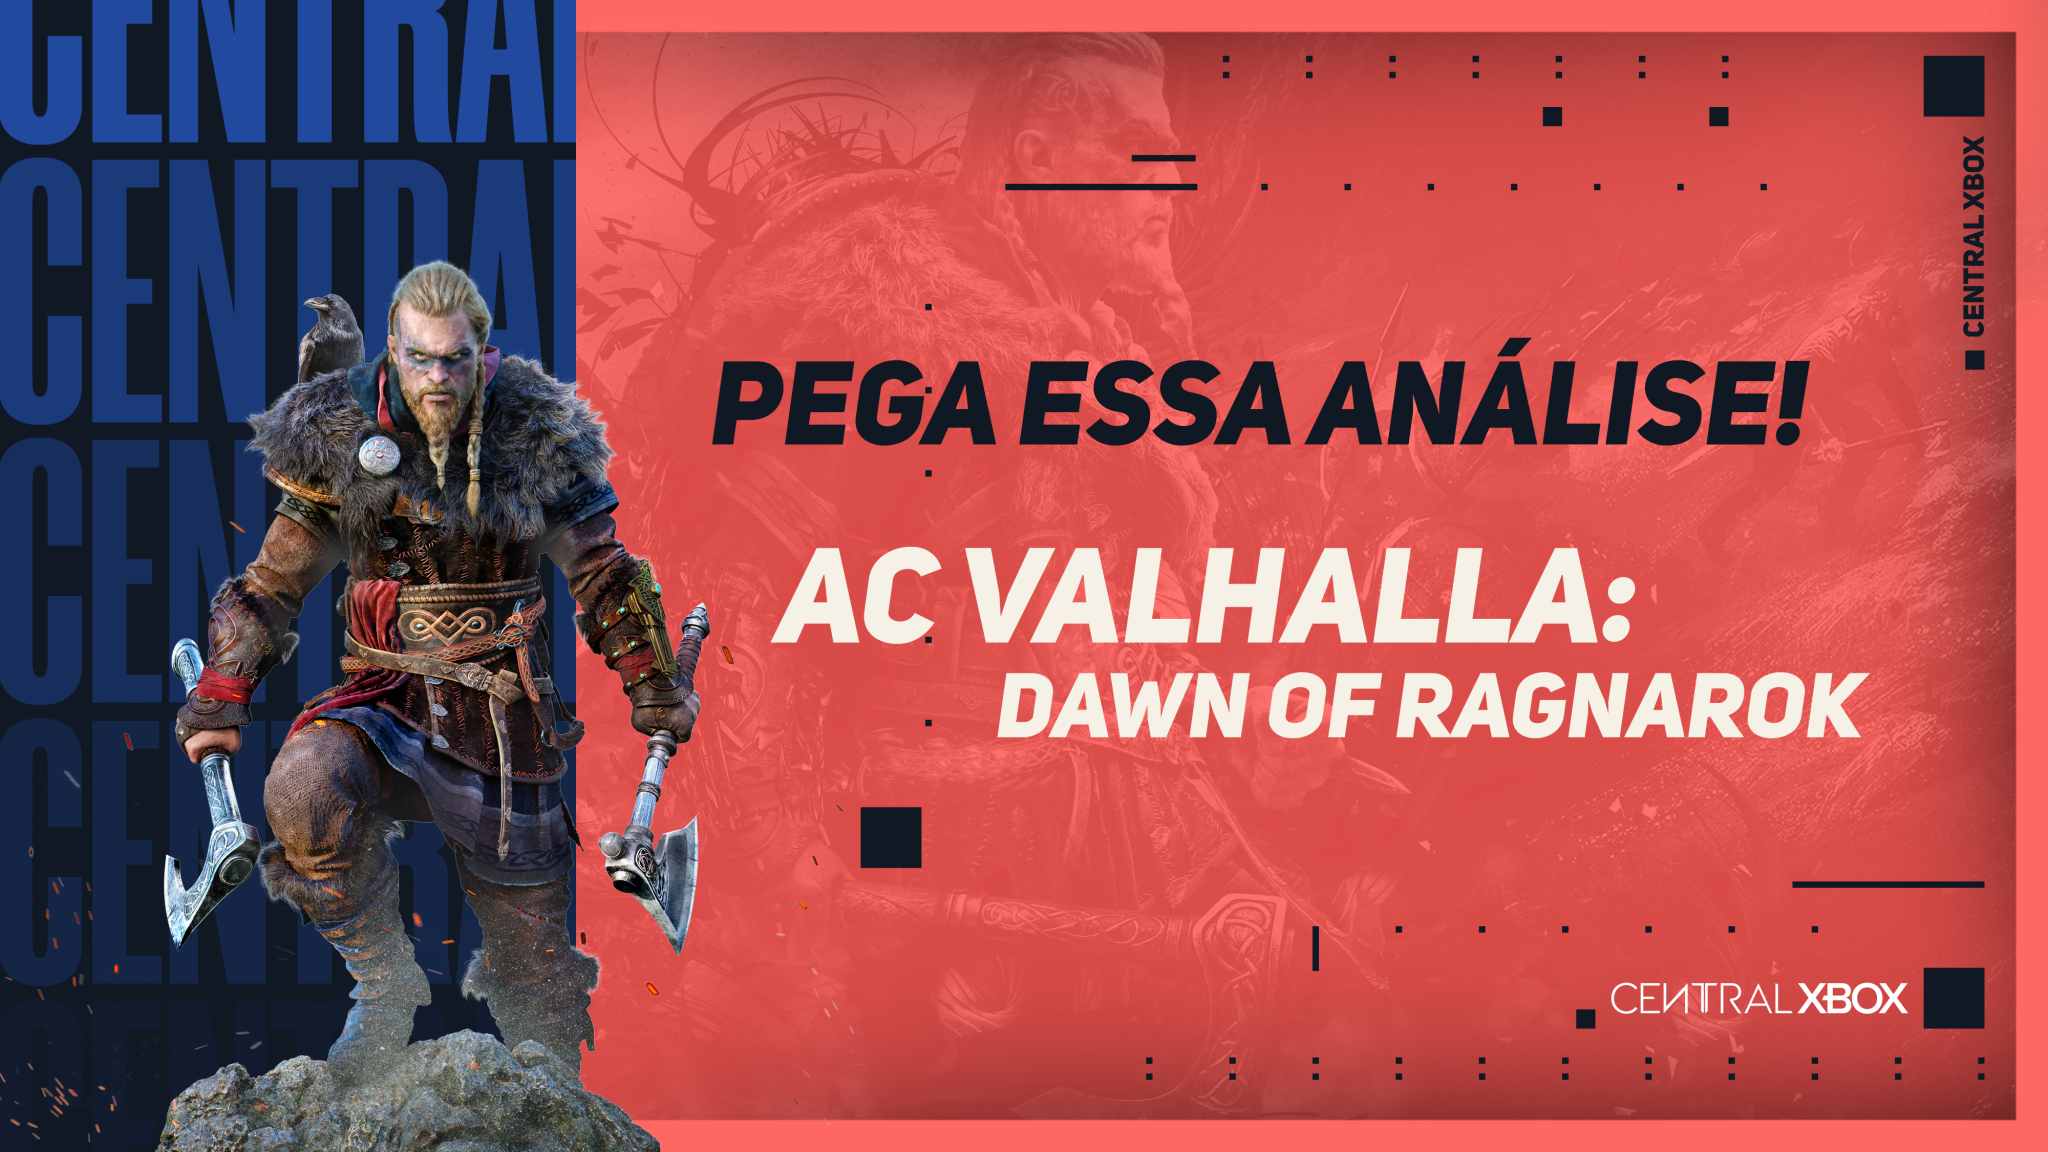 Pega essa Análise! AC Valhalla - Dawn of Ragnarok | Central Xbox